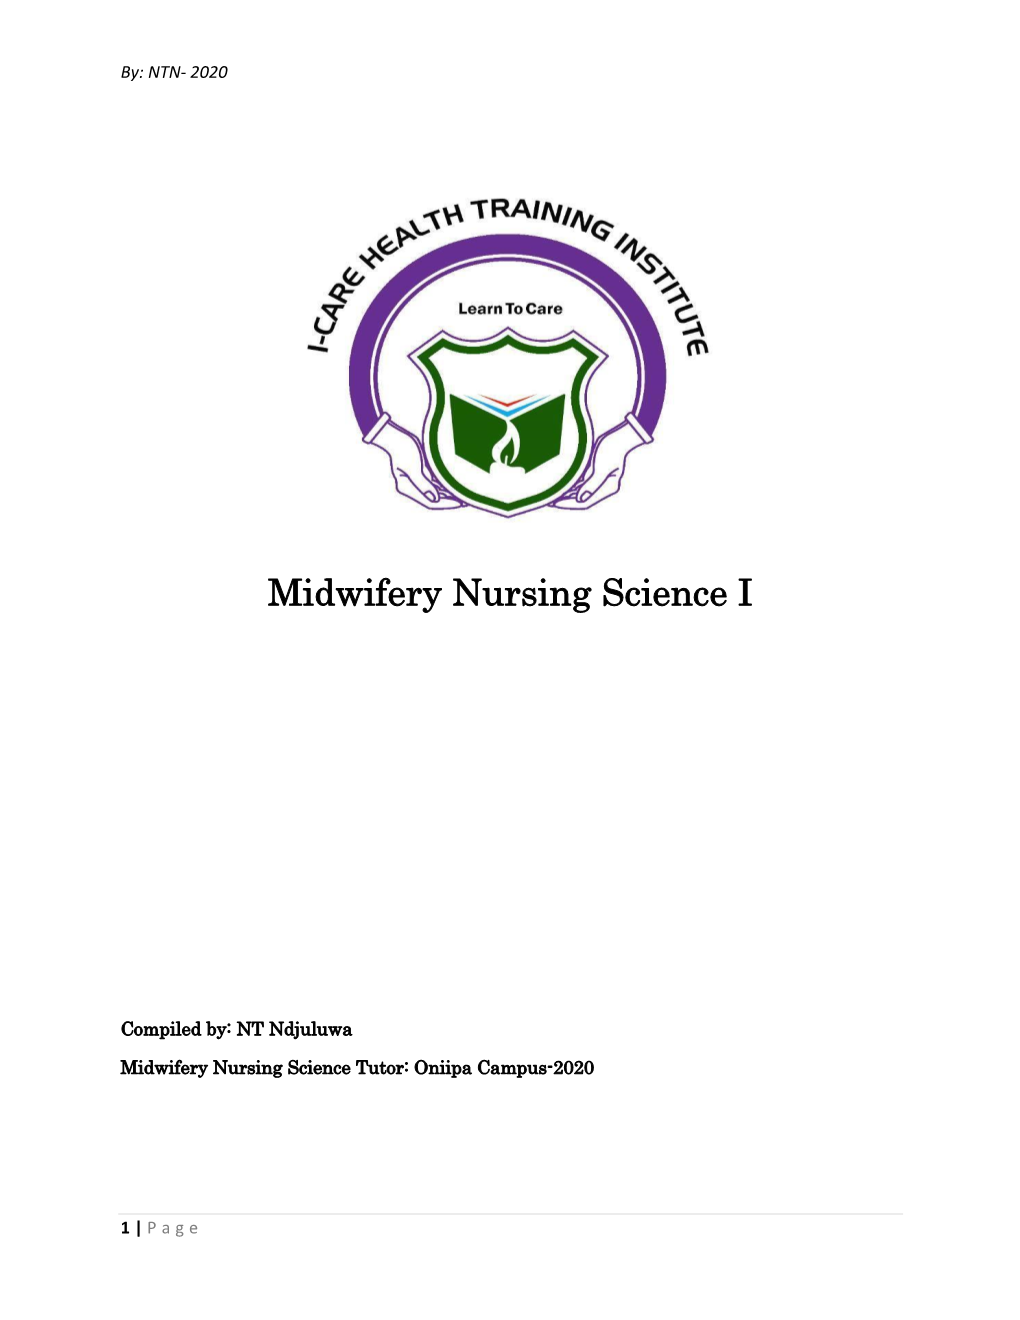 Midwifery Nursing Science I